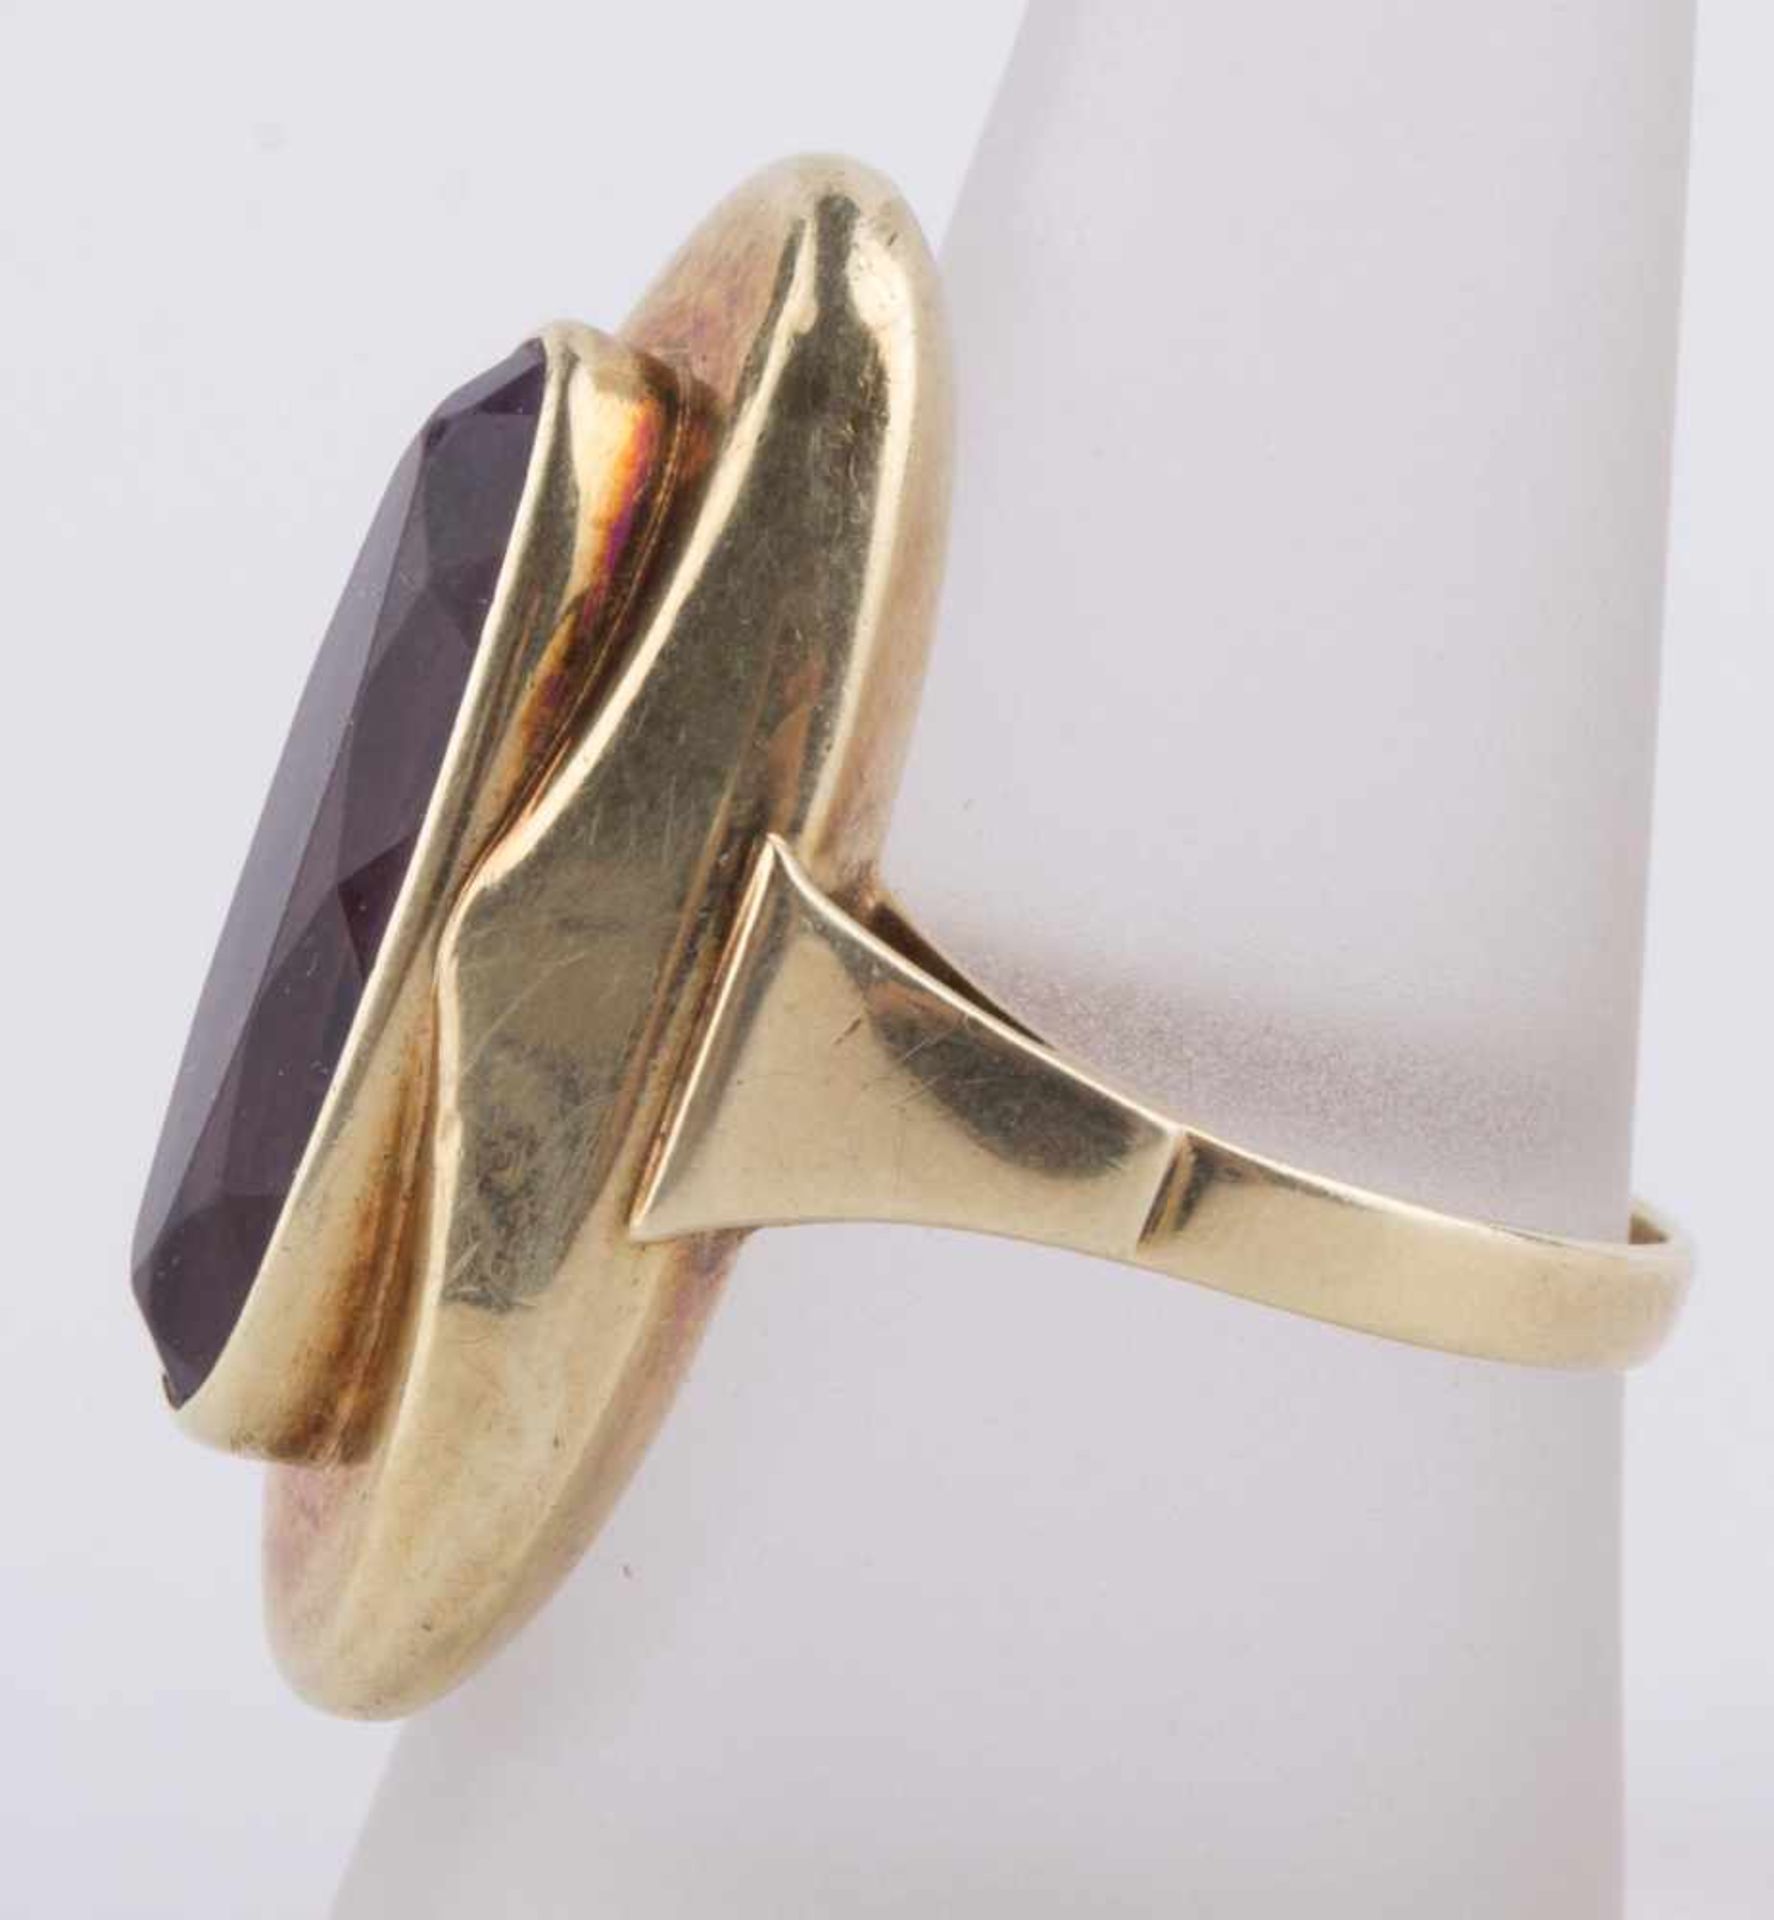 Damen Amethystring / Women's amethyst gold ring GG 585/000, RG ca. 58, Gesamtgewicht ca. 6 g. - Bild 5 aus 12